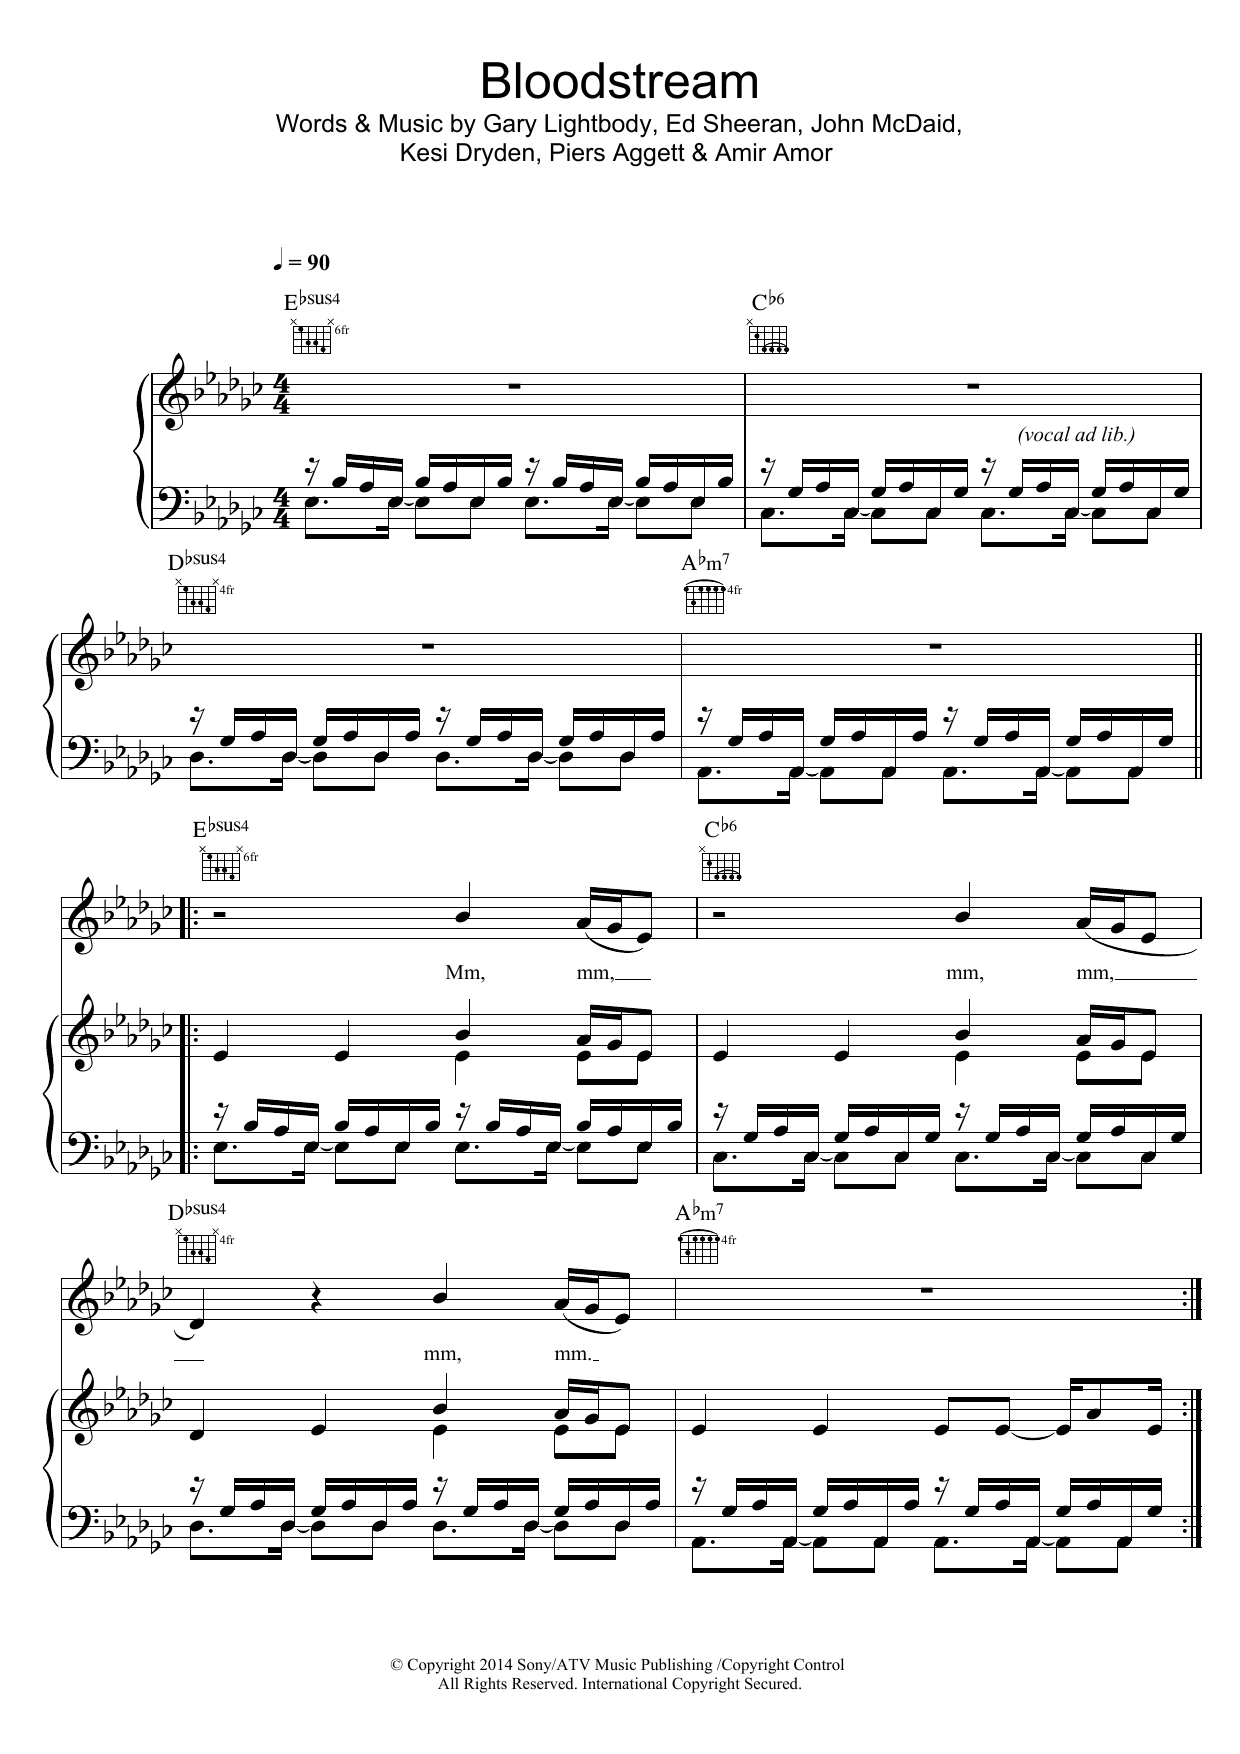 Ed Sheeran Bloodstream Sheet Music Notes & Chords for Ukulele - Download or Print PDF